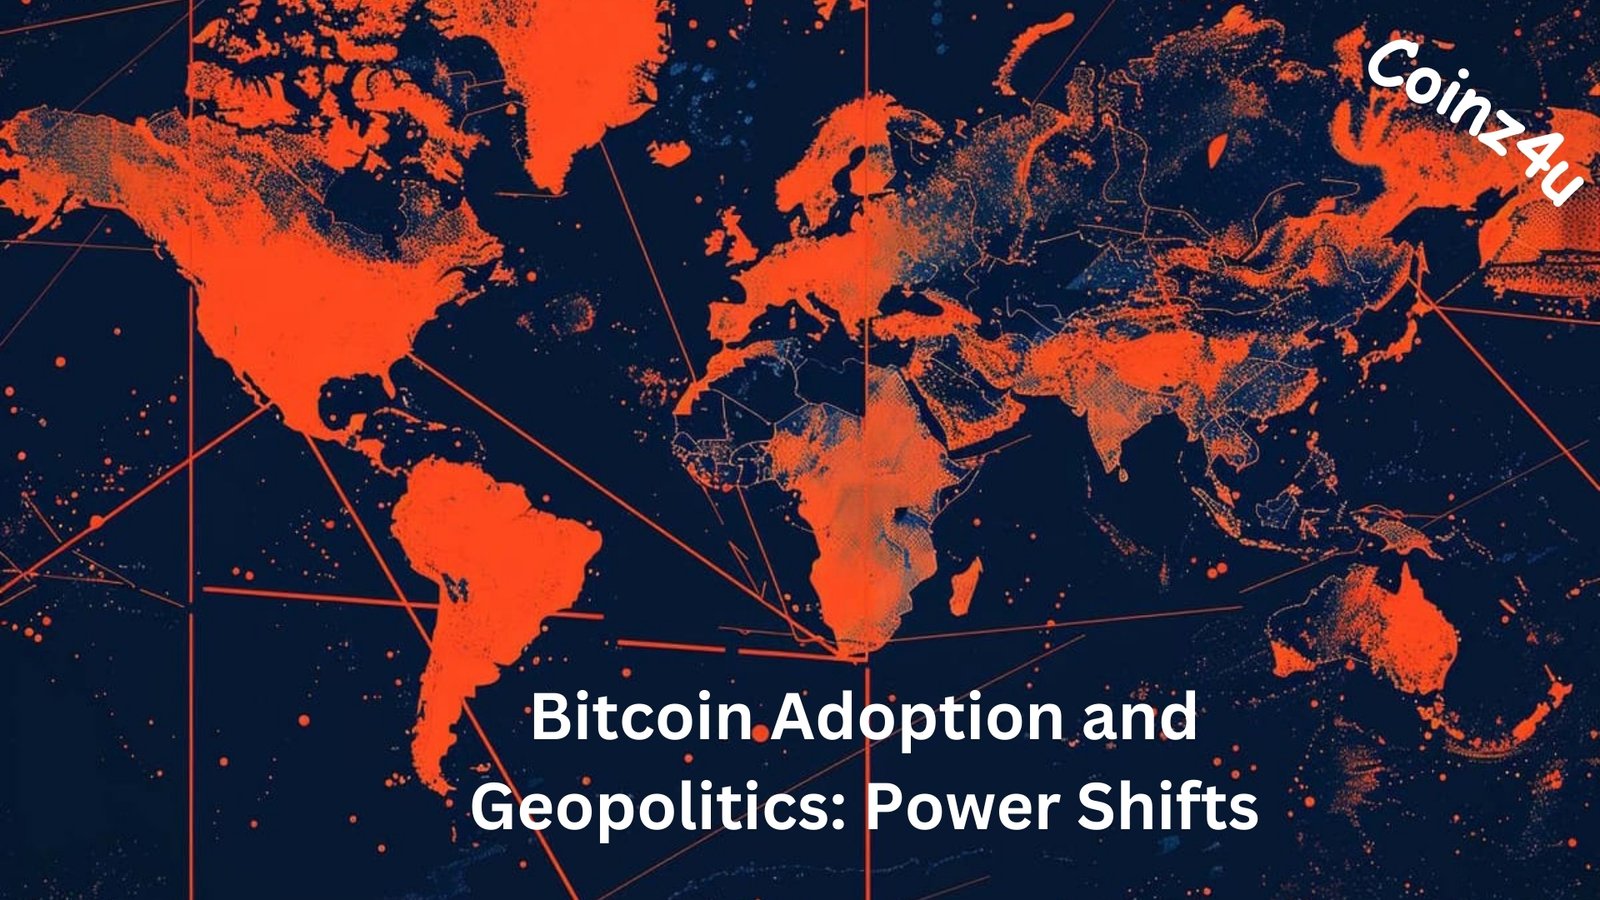 Geopolitics of Bitcoin